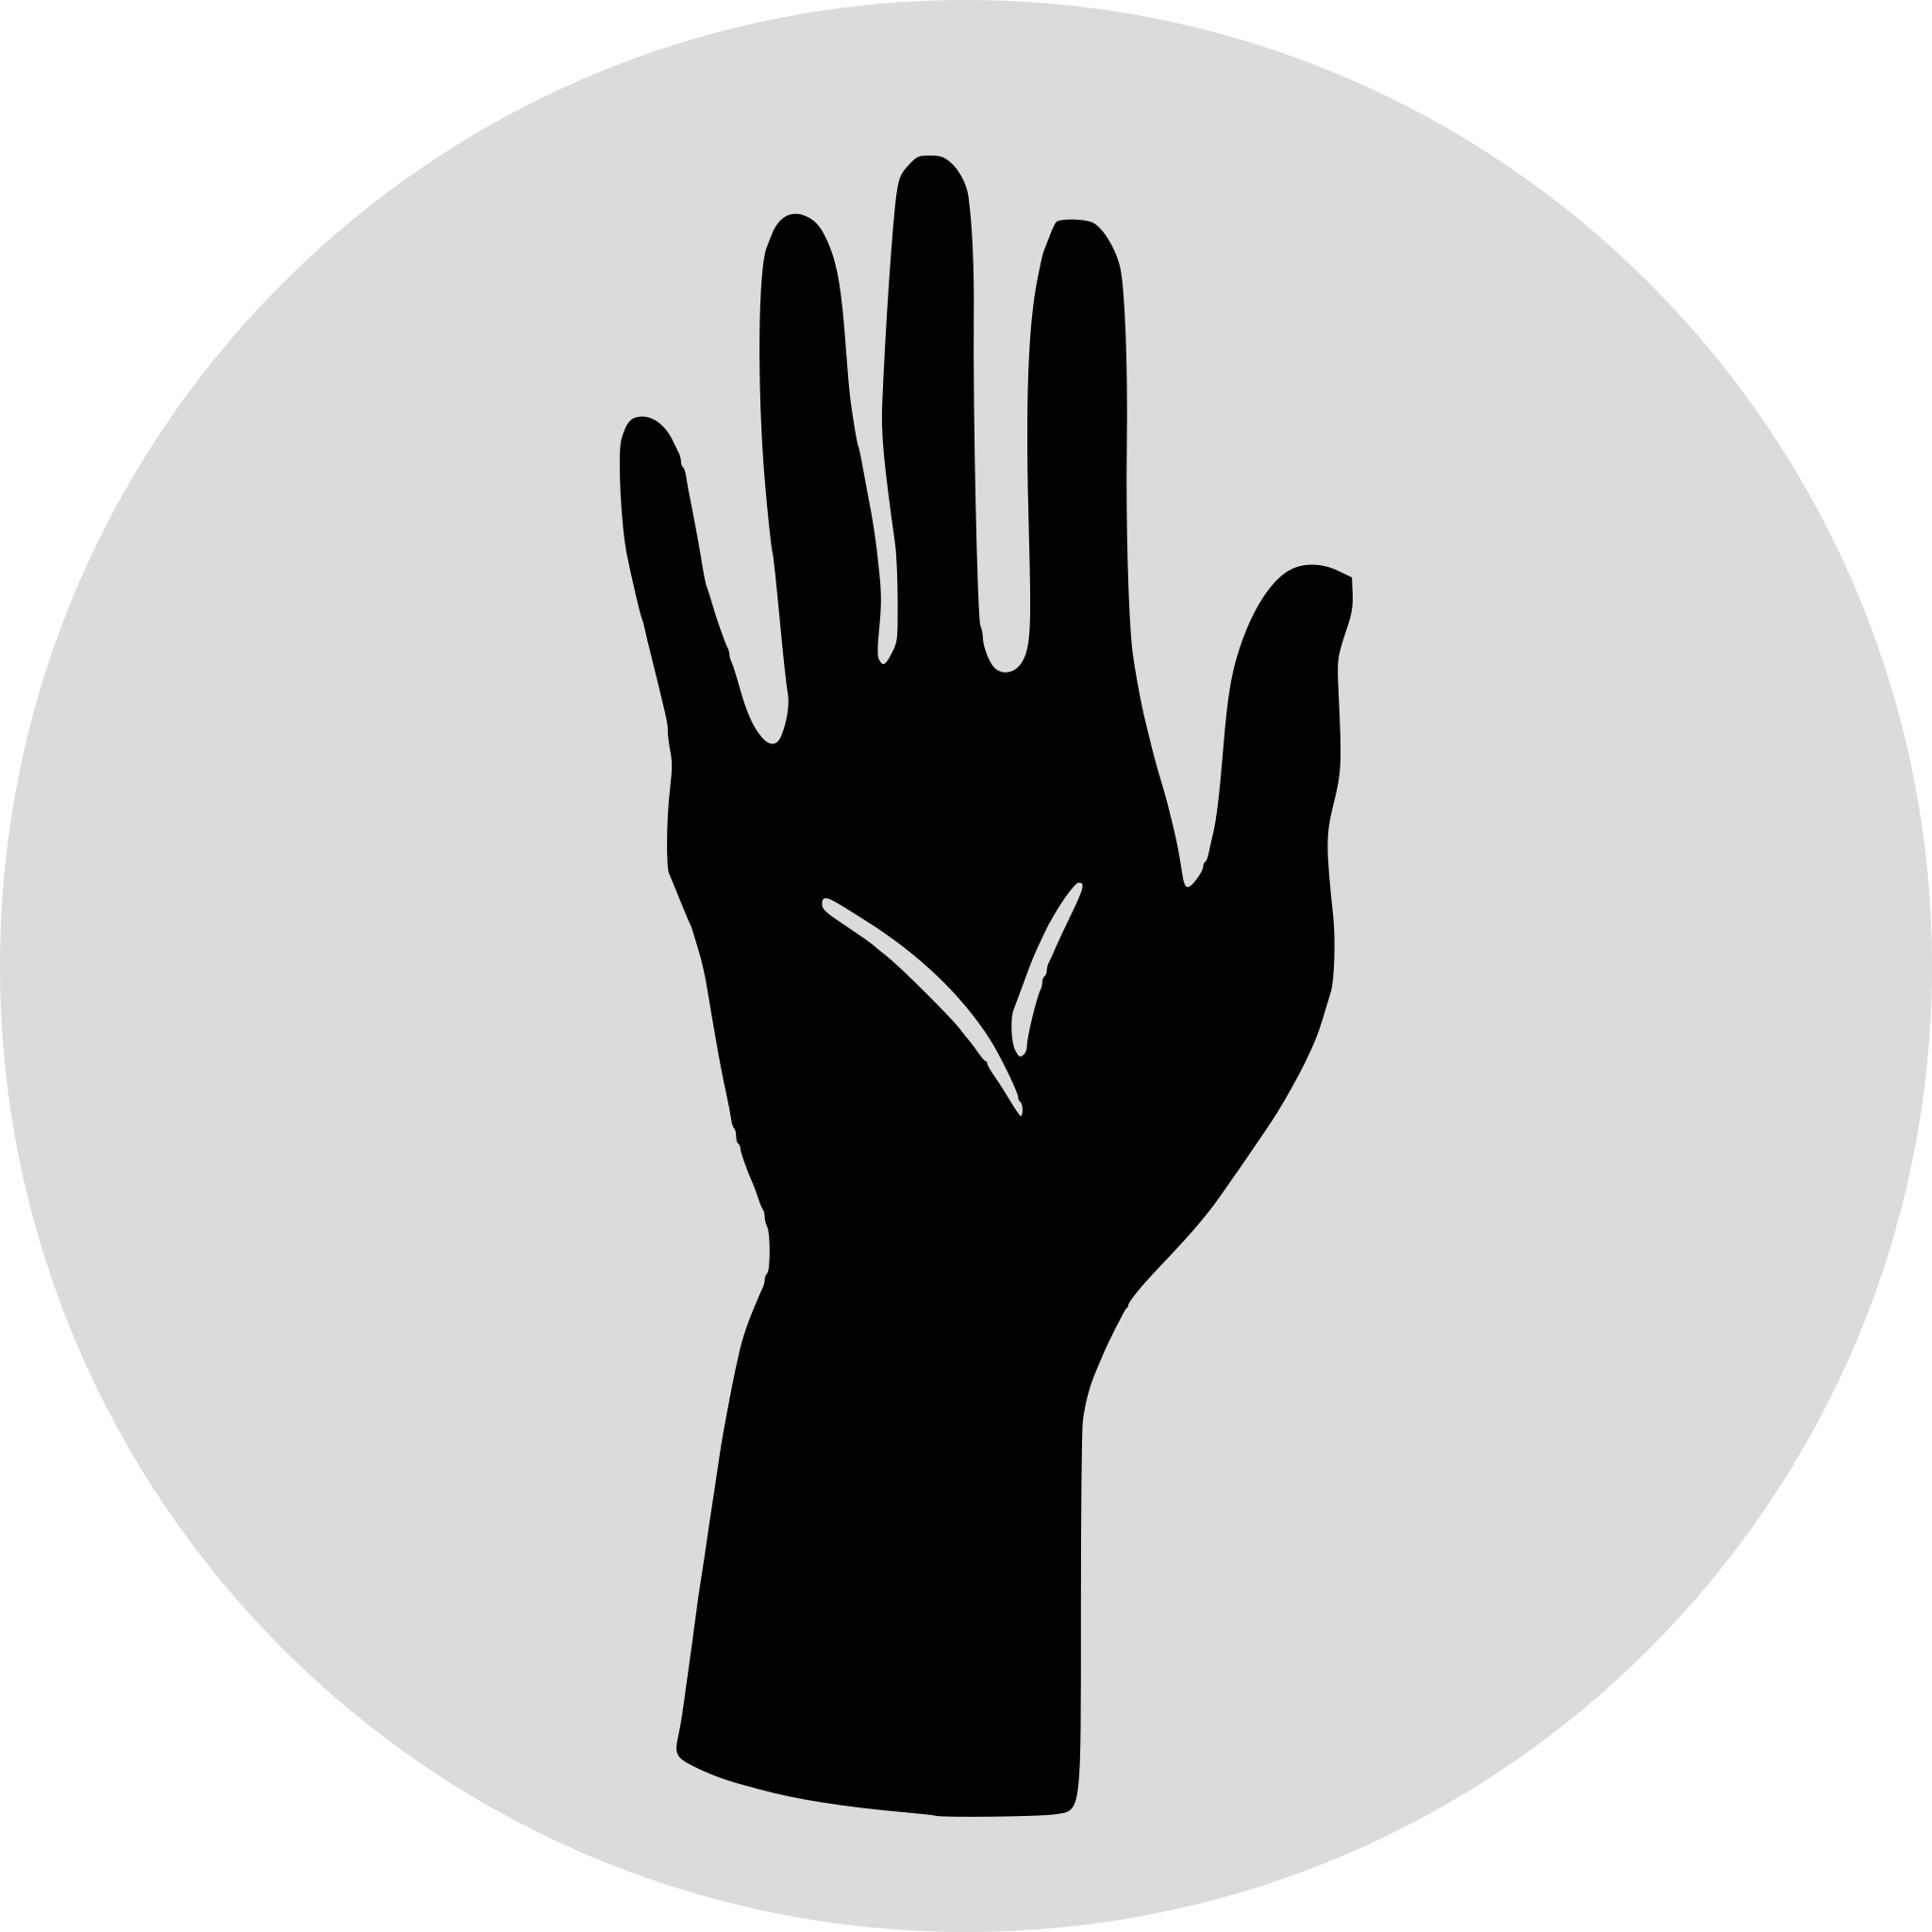 Small Hands - Wikidata